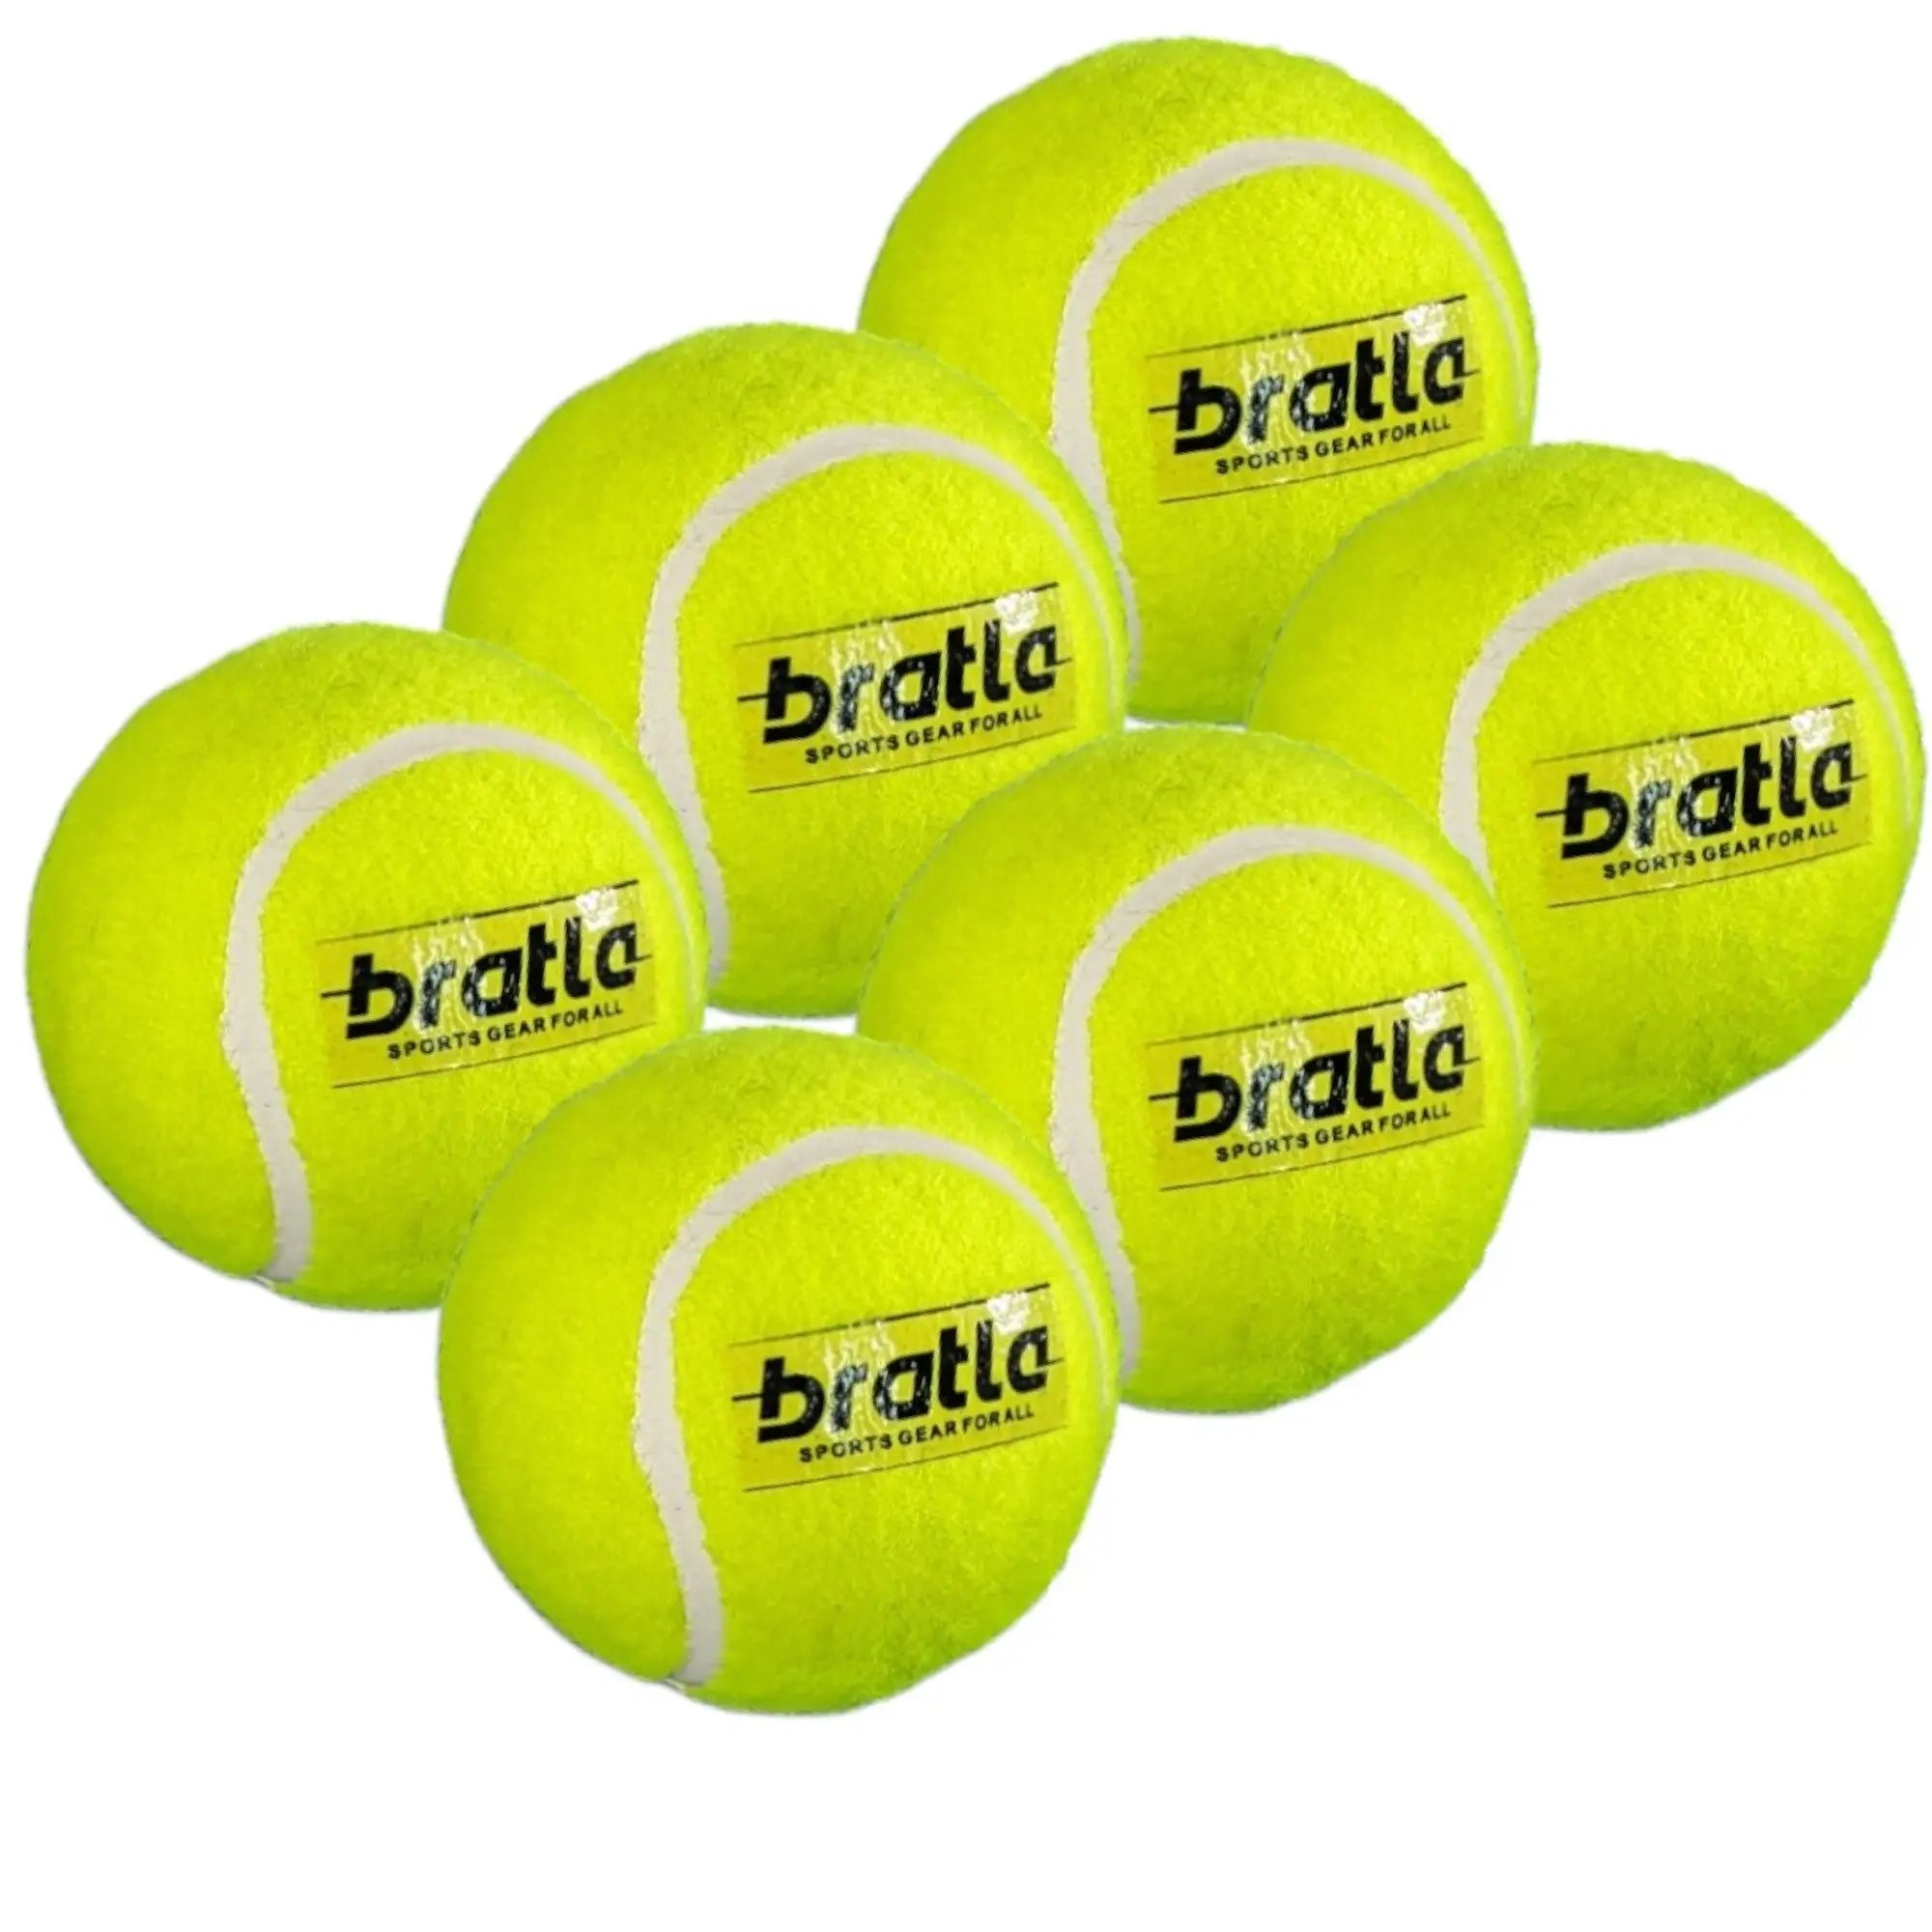 Bratla Heavy Tennis Cricket Ball 125g - Pack of 6 | Hard Tennis Balls for Softball Cricket Games - BALL - SOFTBALL